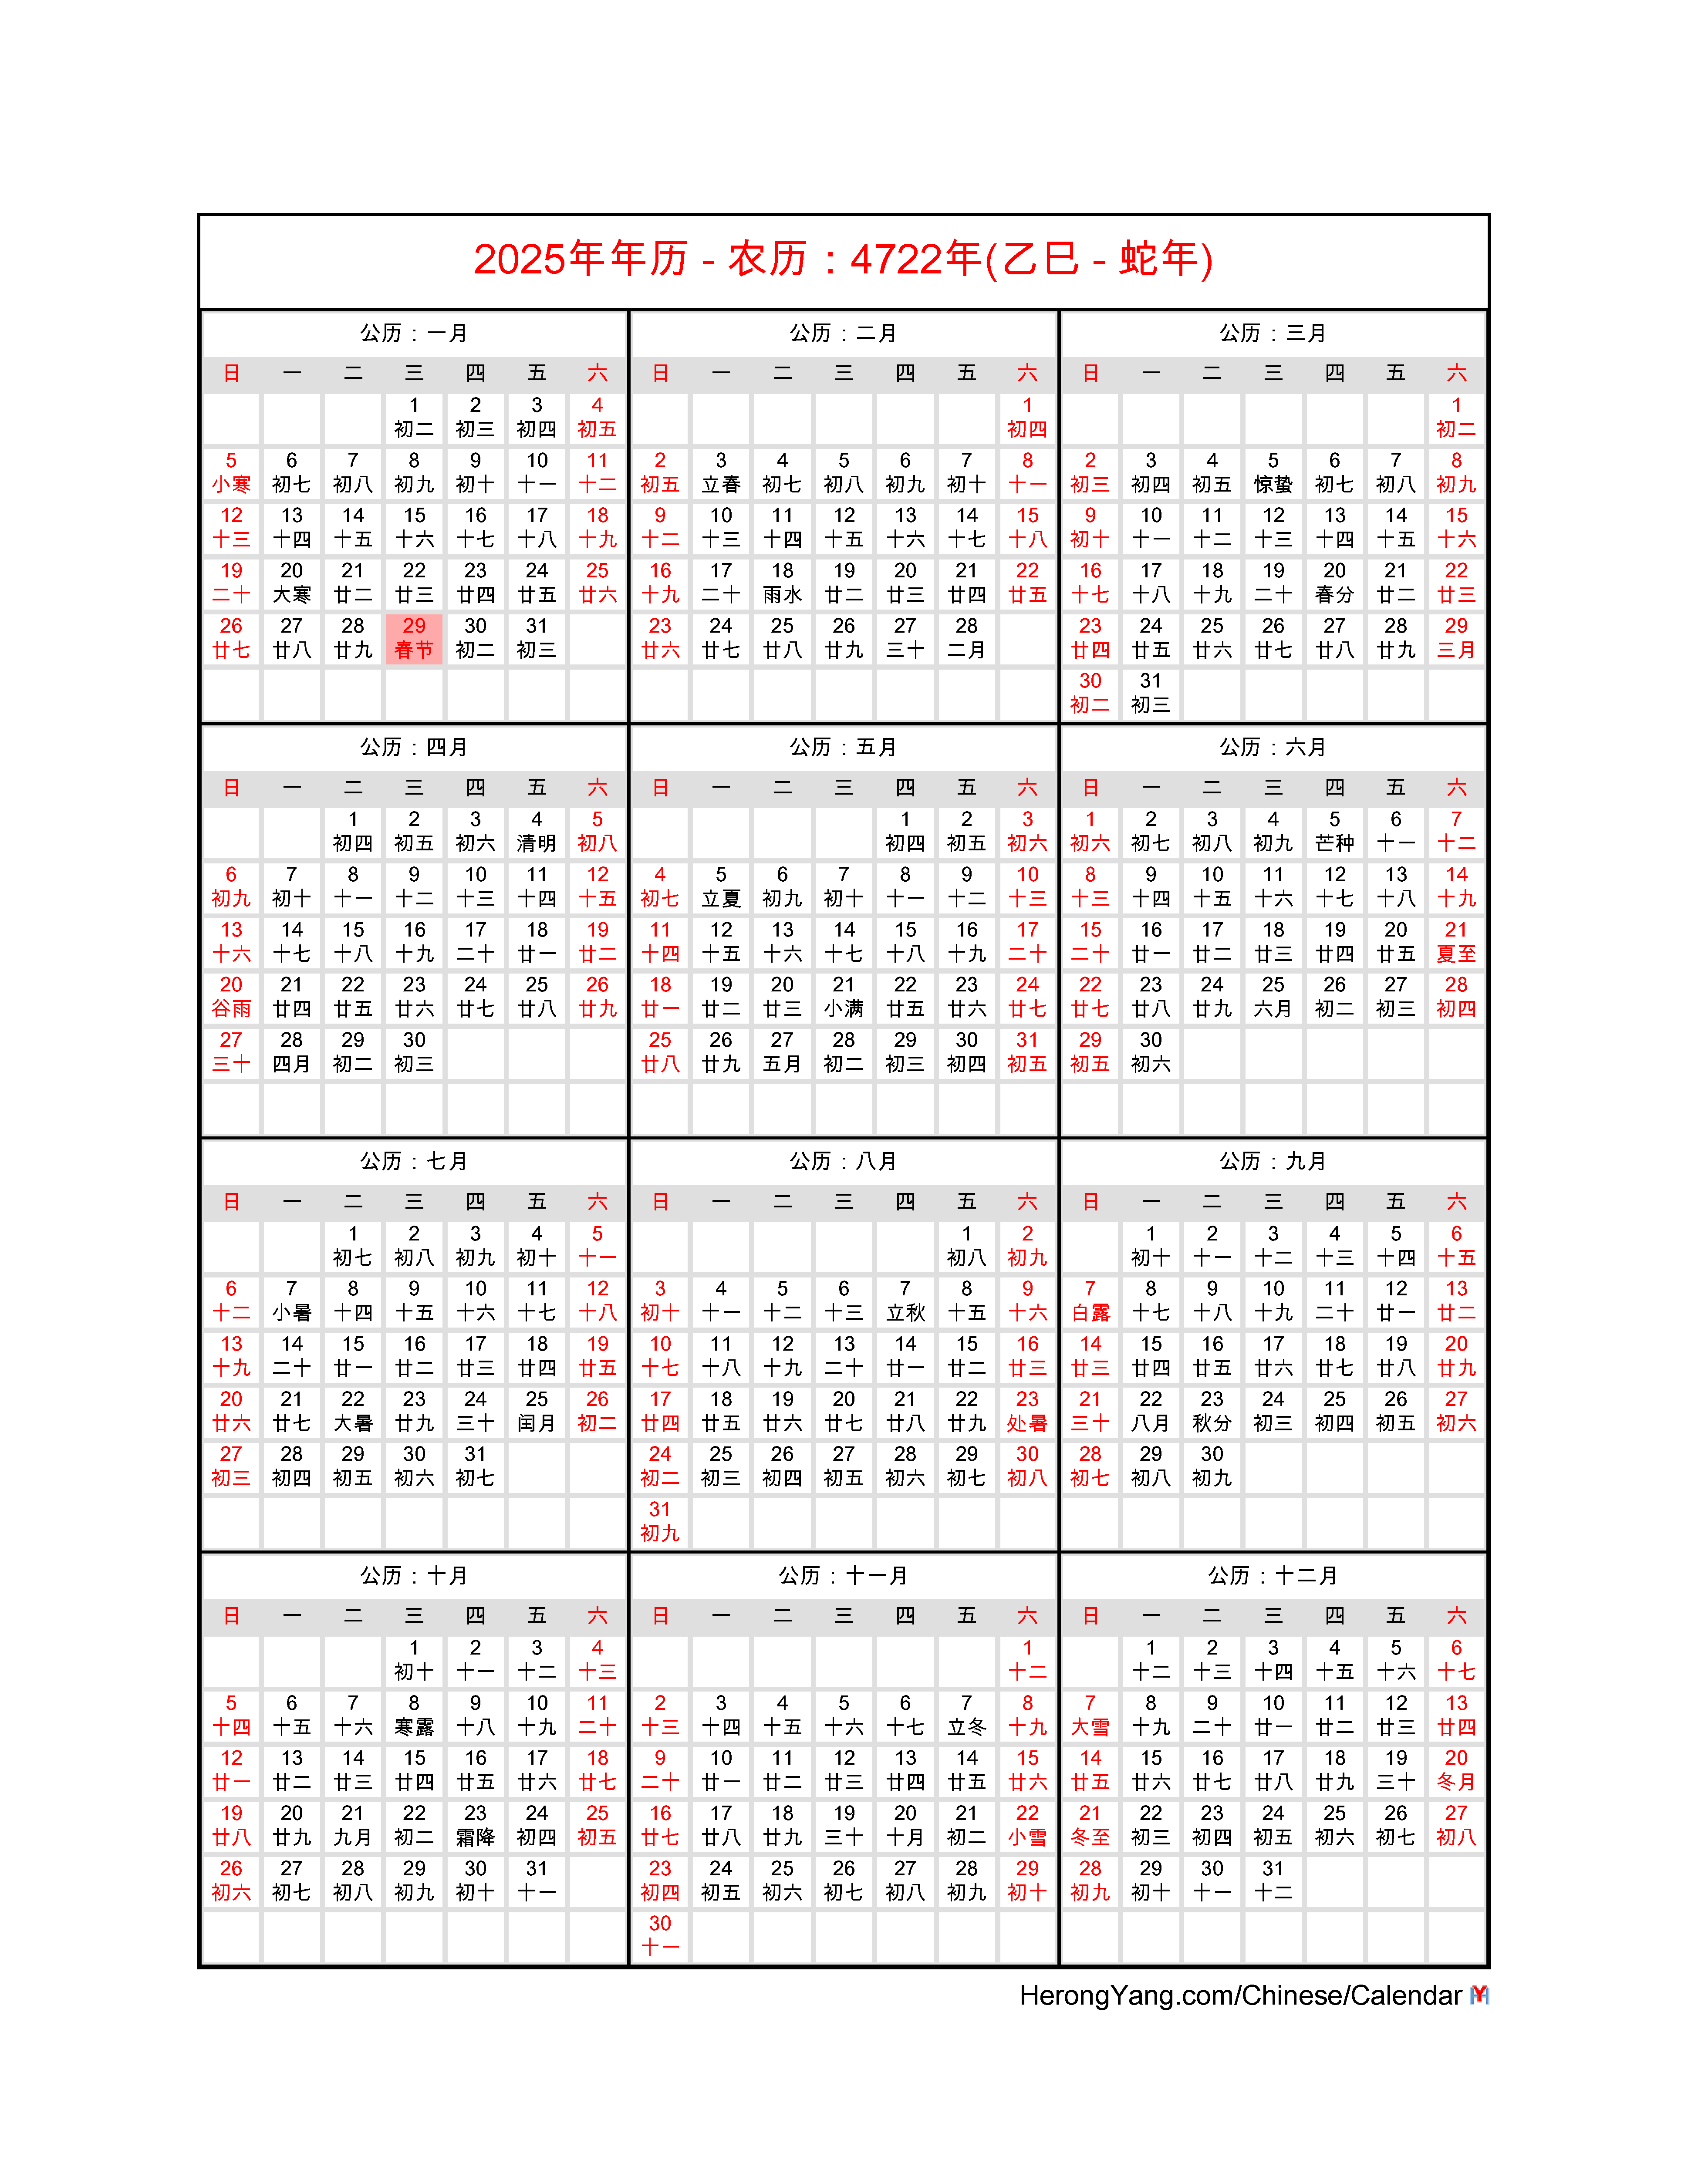 Lunar Calendar 2025 Chinese 